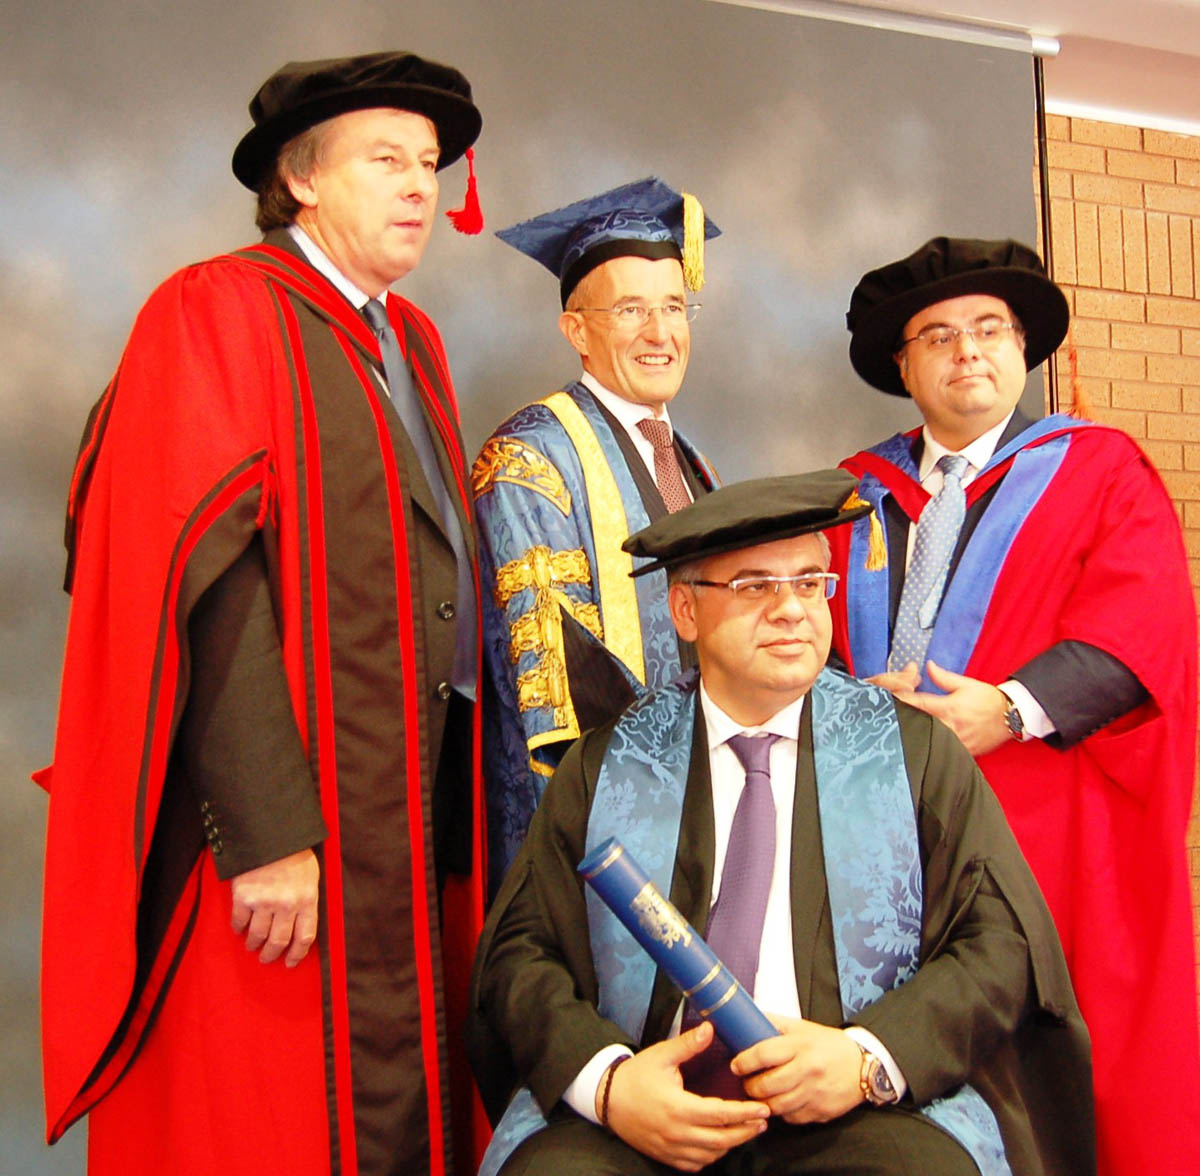 Buhalis and John Kent Honorary Graduate